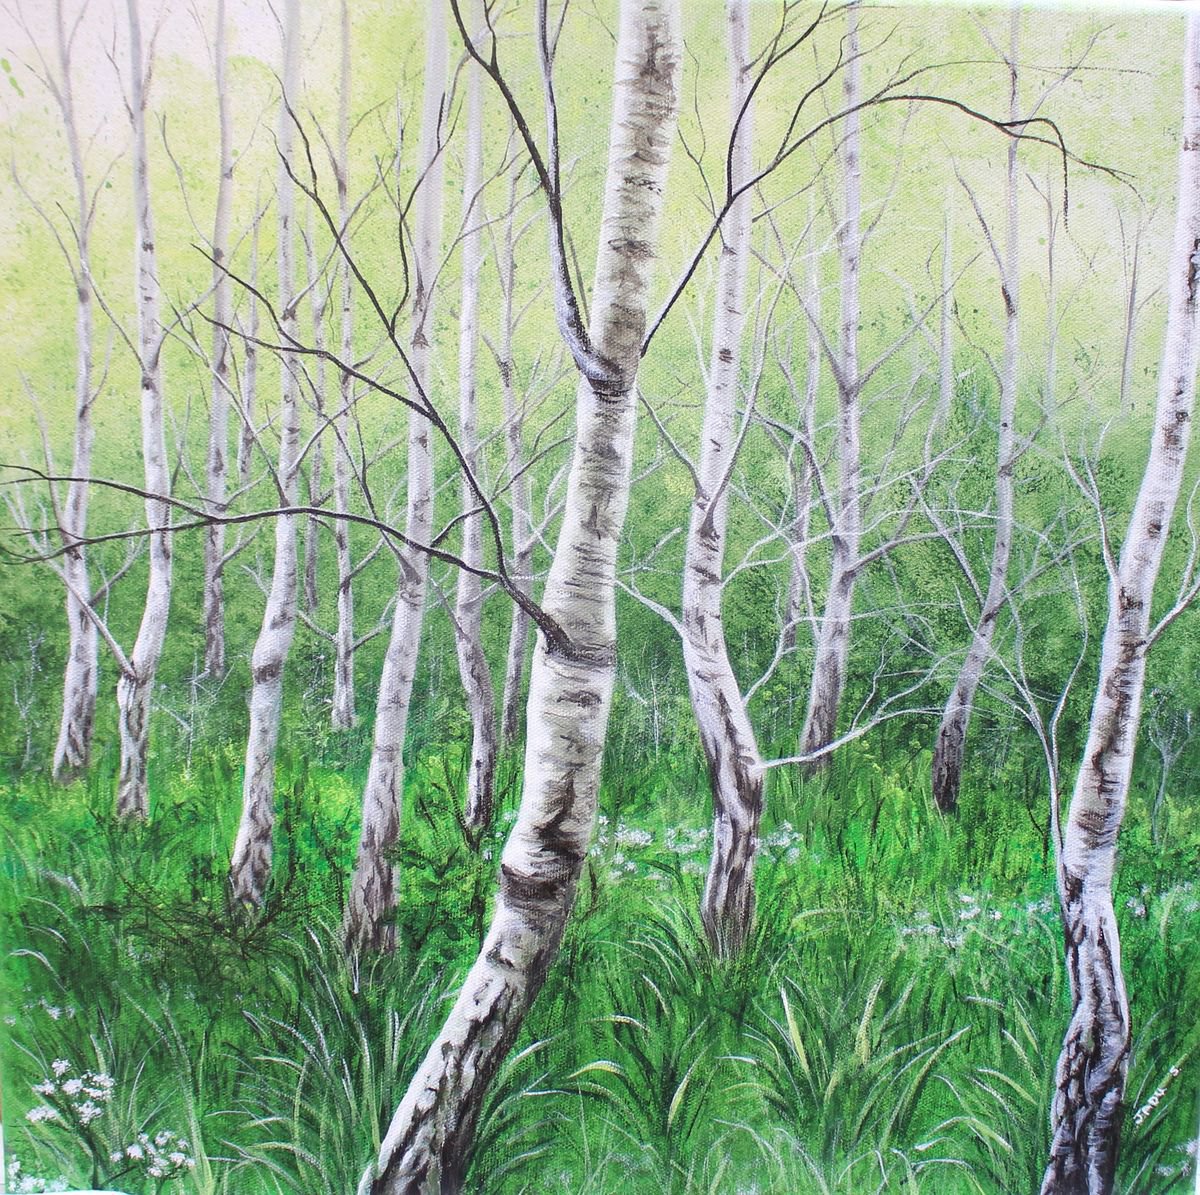 Tranquility - silver birch trees by Jadu Sheridan